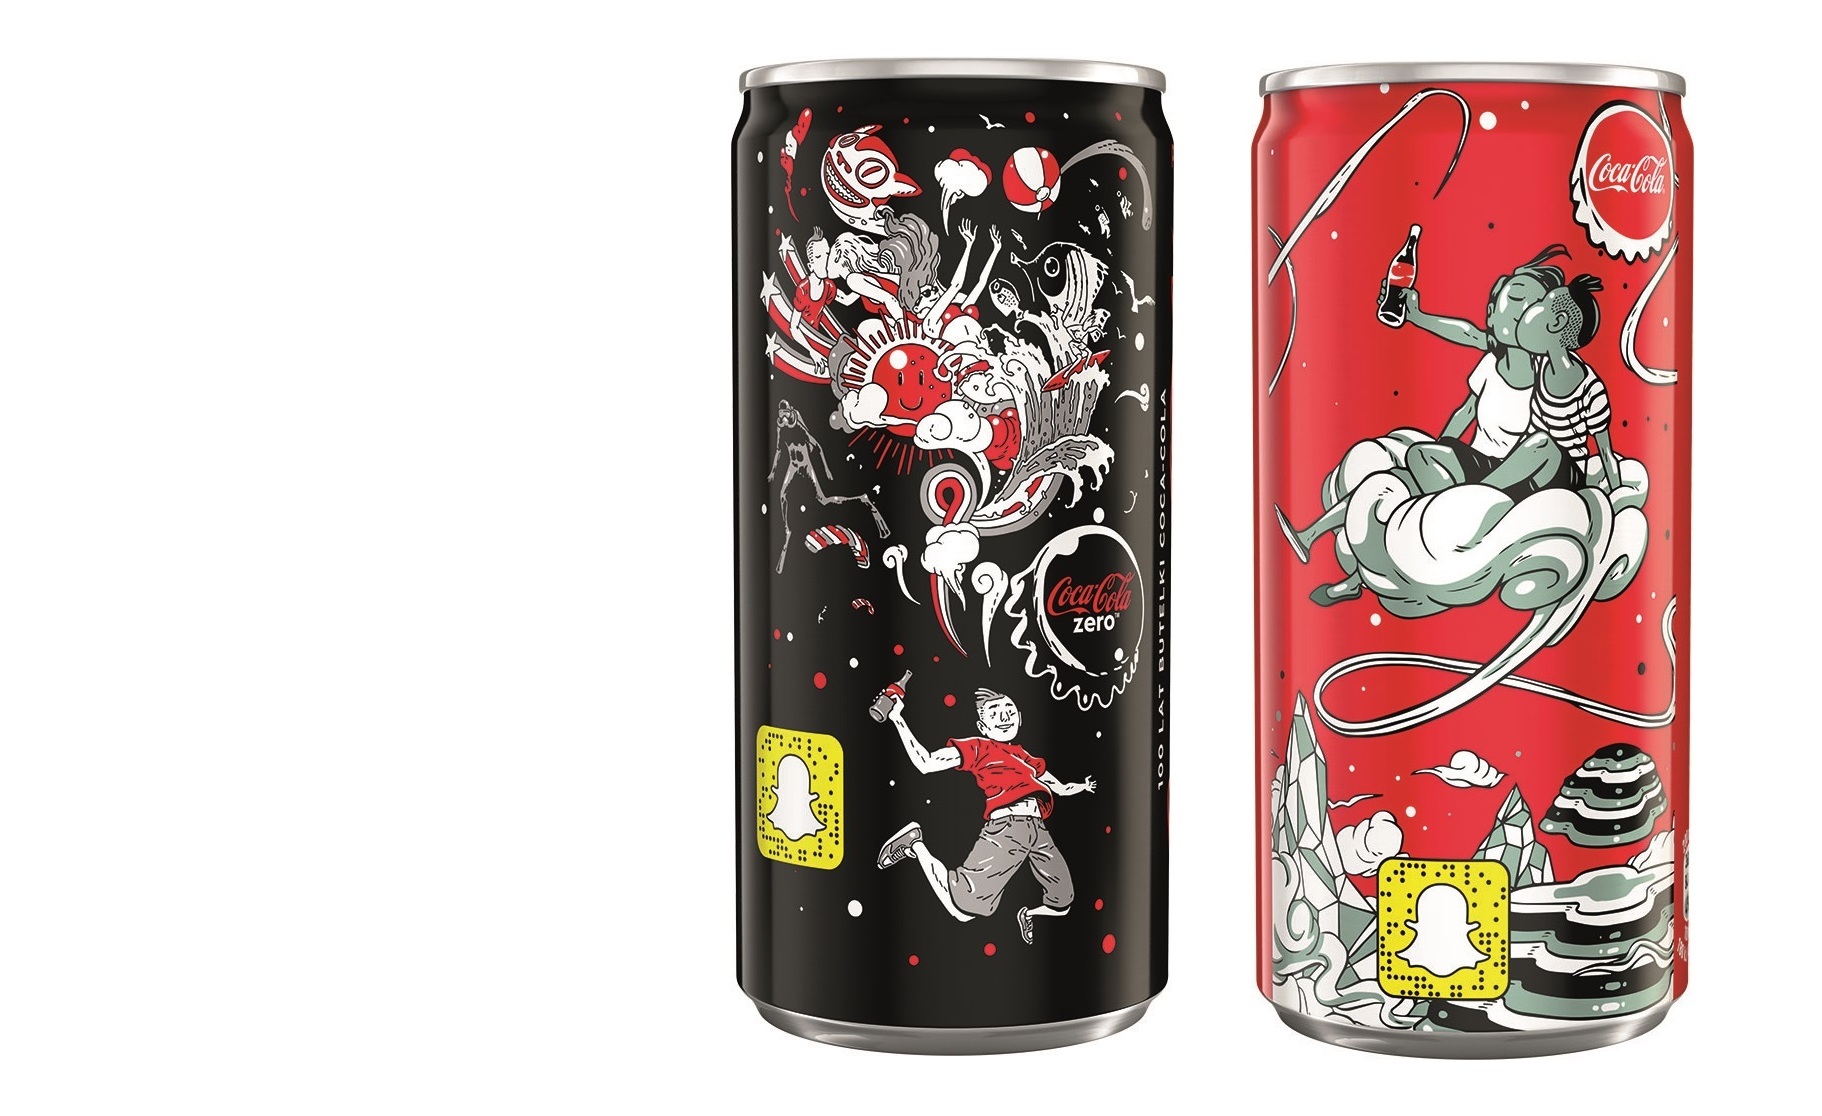 Artystyczne puszki Coca-Cola Coca-Cola Packshot Coca Cola Zero 200 ml CAN Closed Clear Mural 3D rendered 1969 2015 Jul 27 1